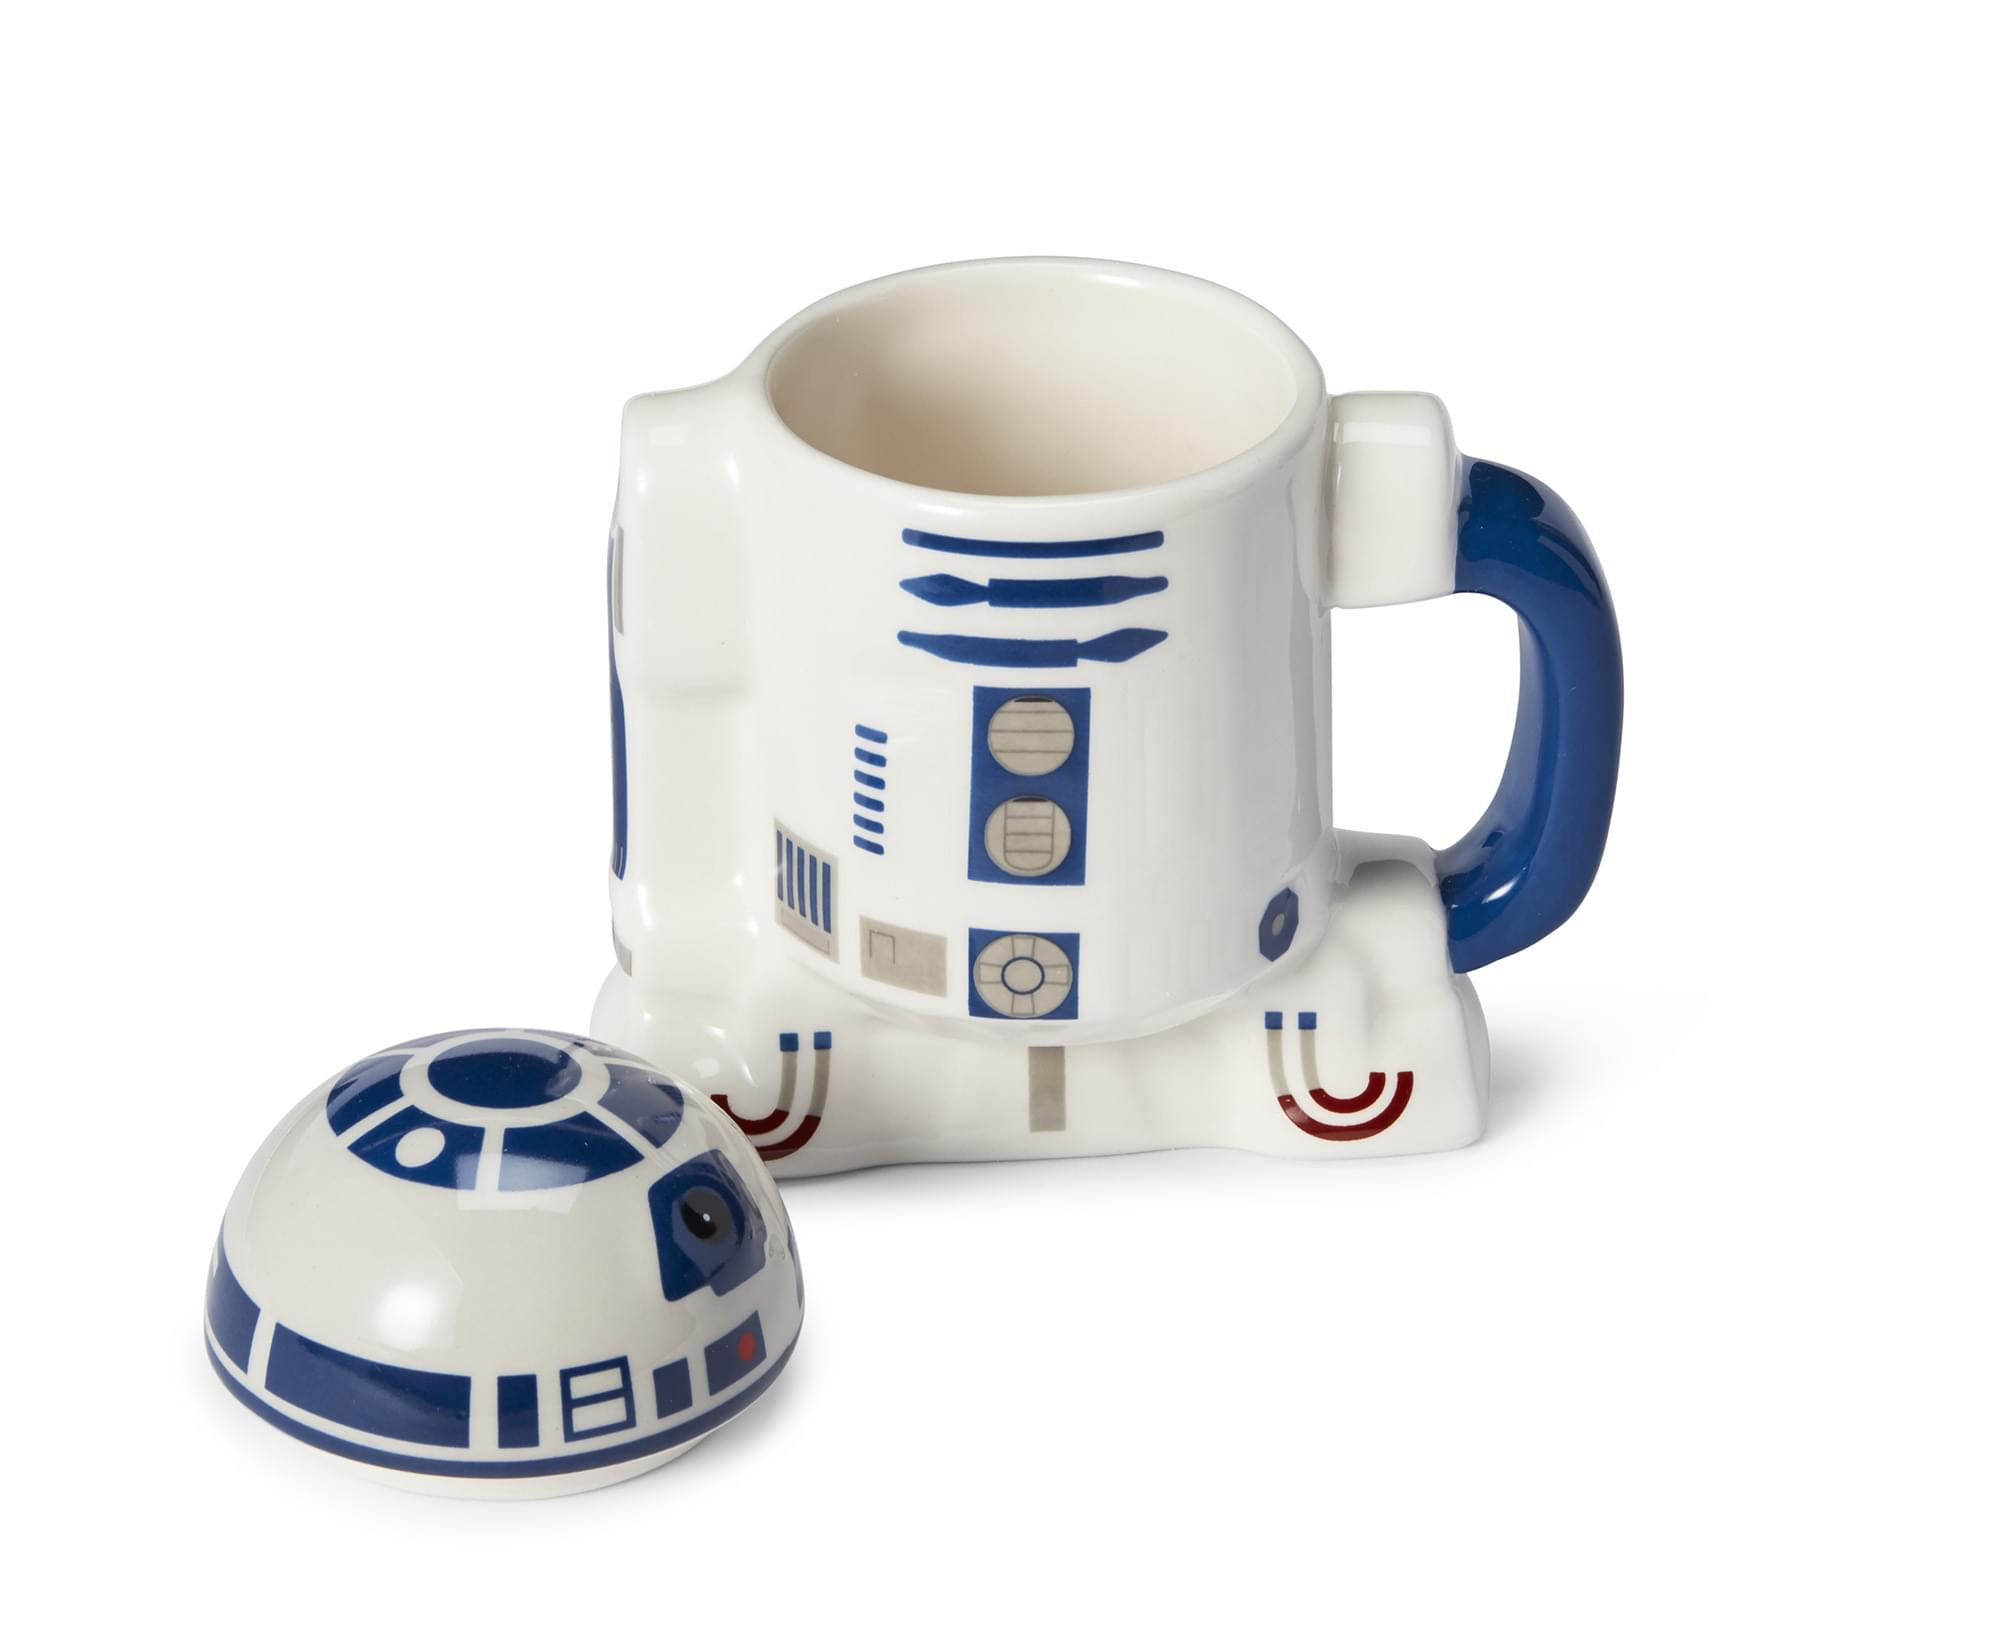 Mug Pocillo R2D2 Star Wars Droide Azul con Tapa